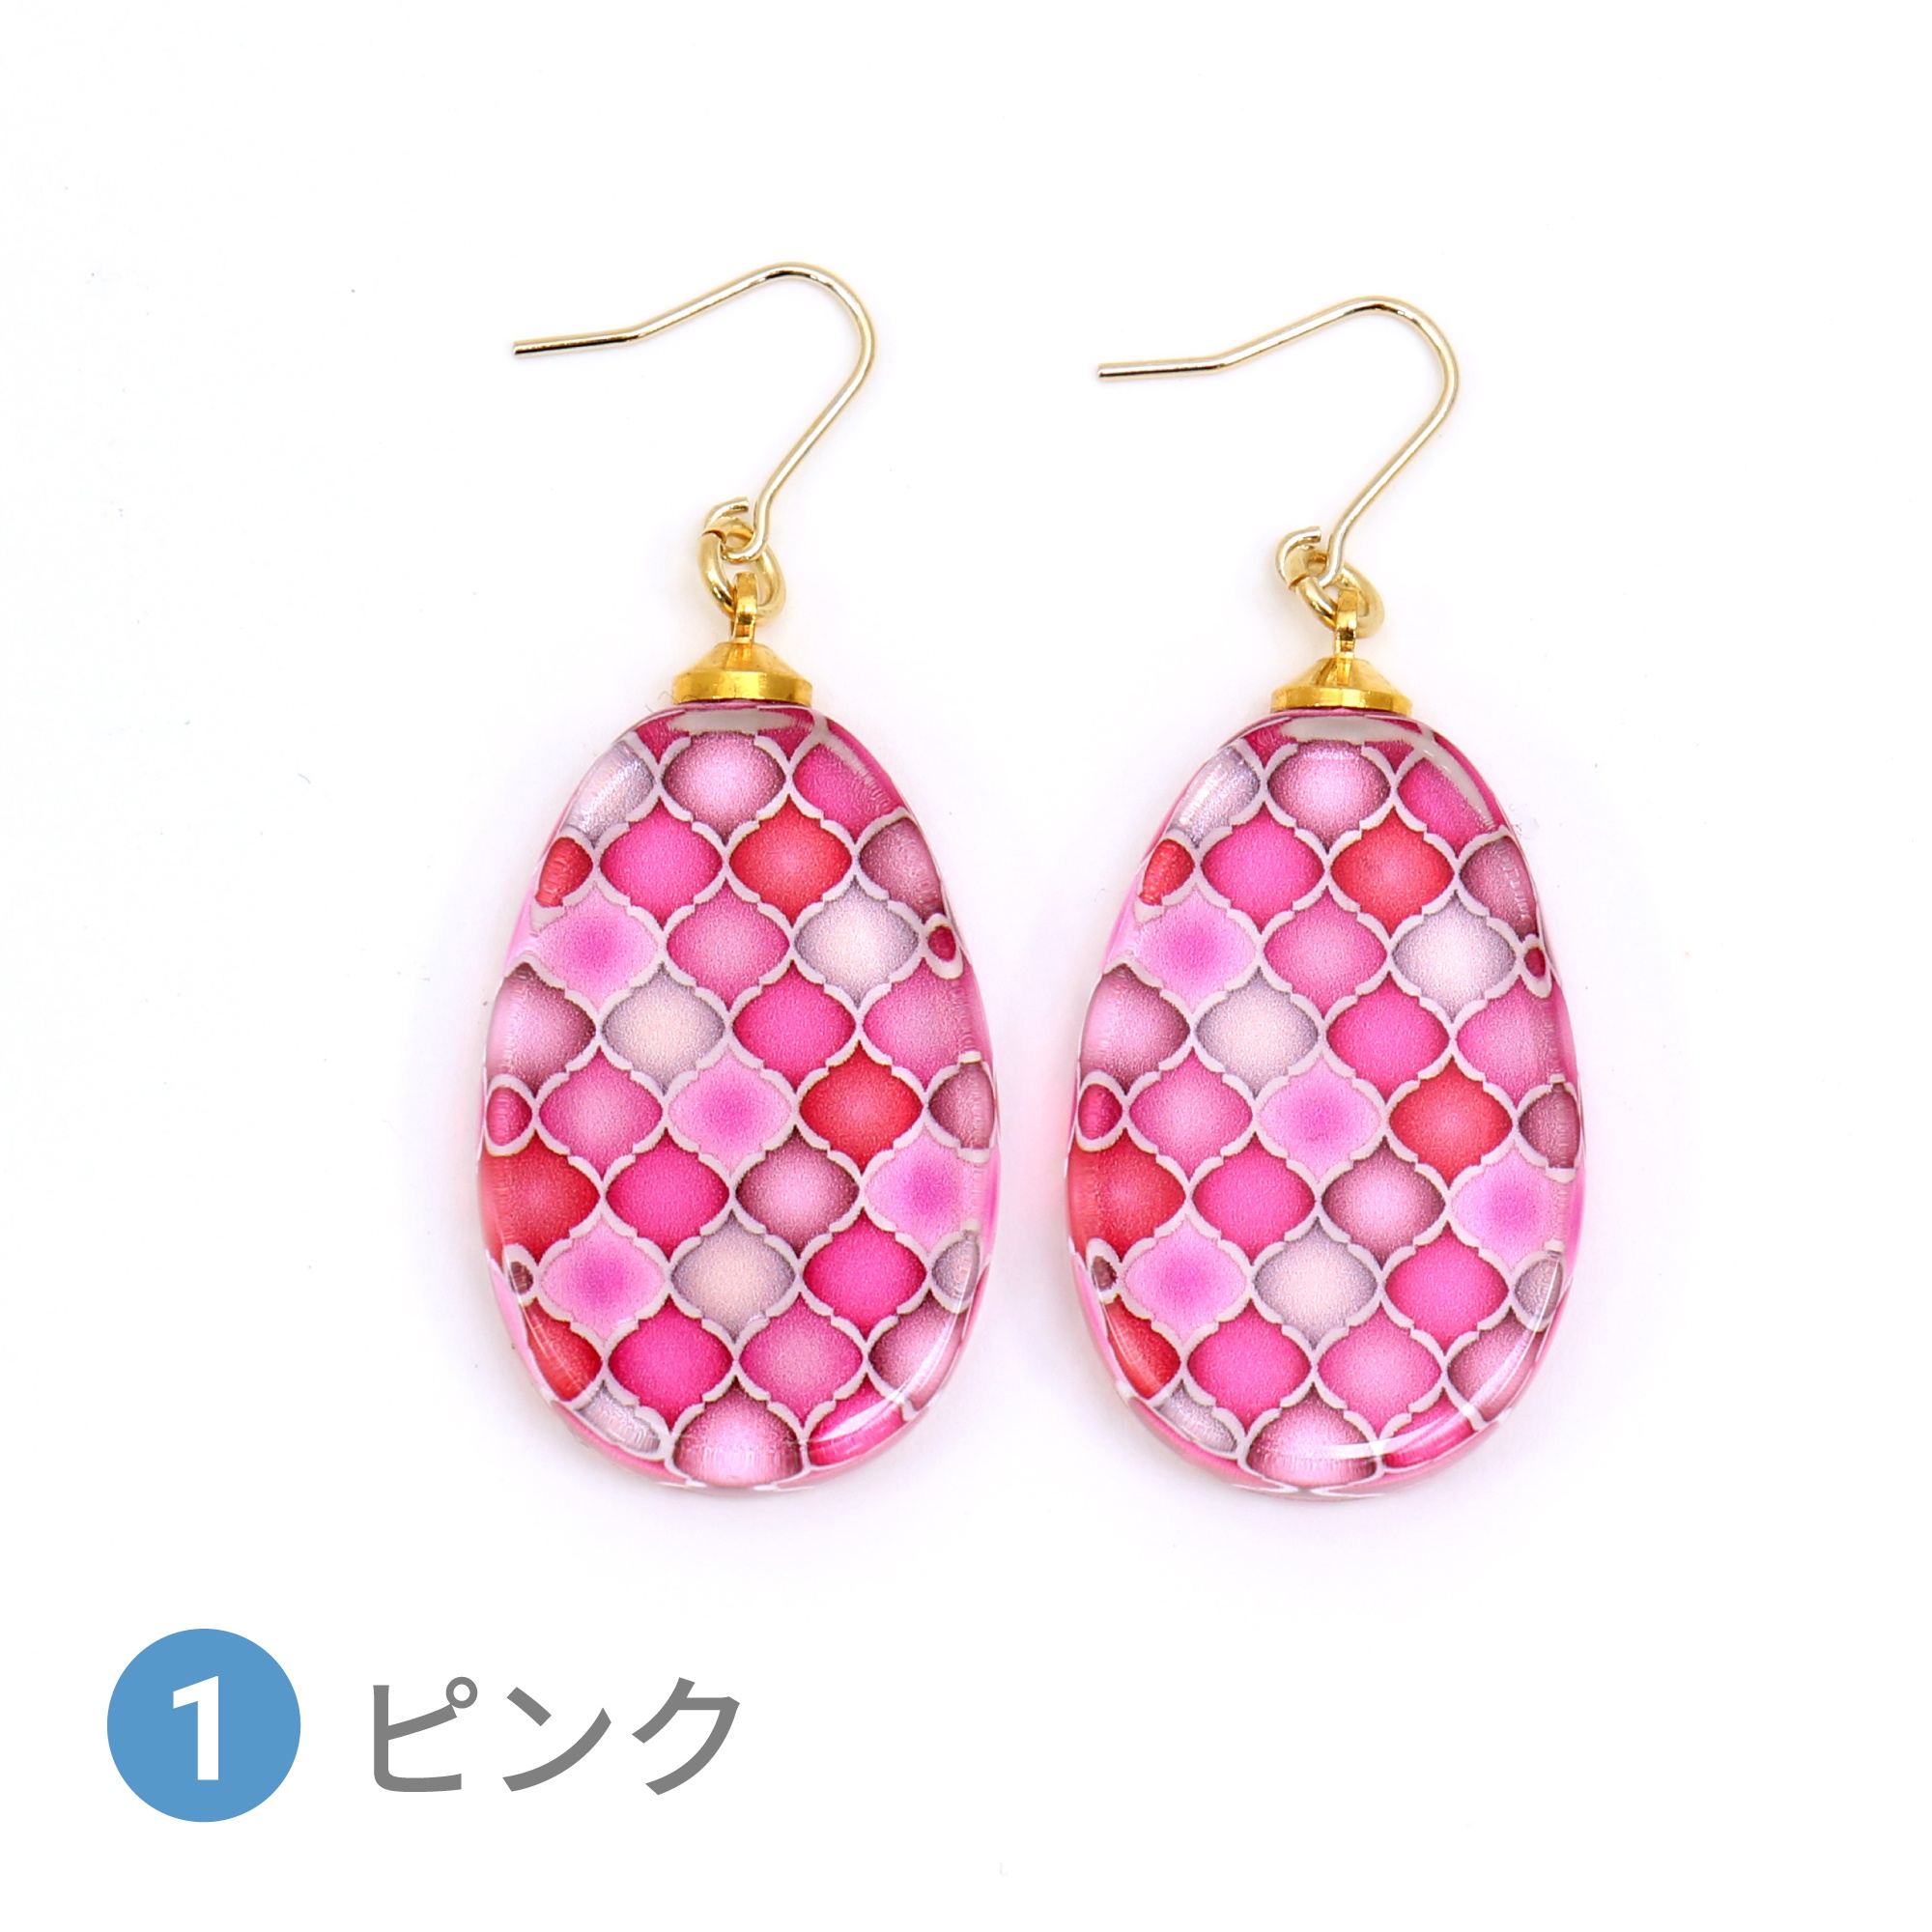 Glass accessories Pierced Earring MOROCCAN pink drop shape